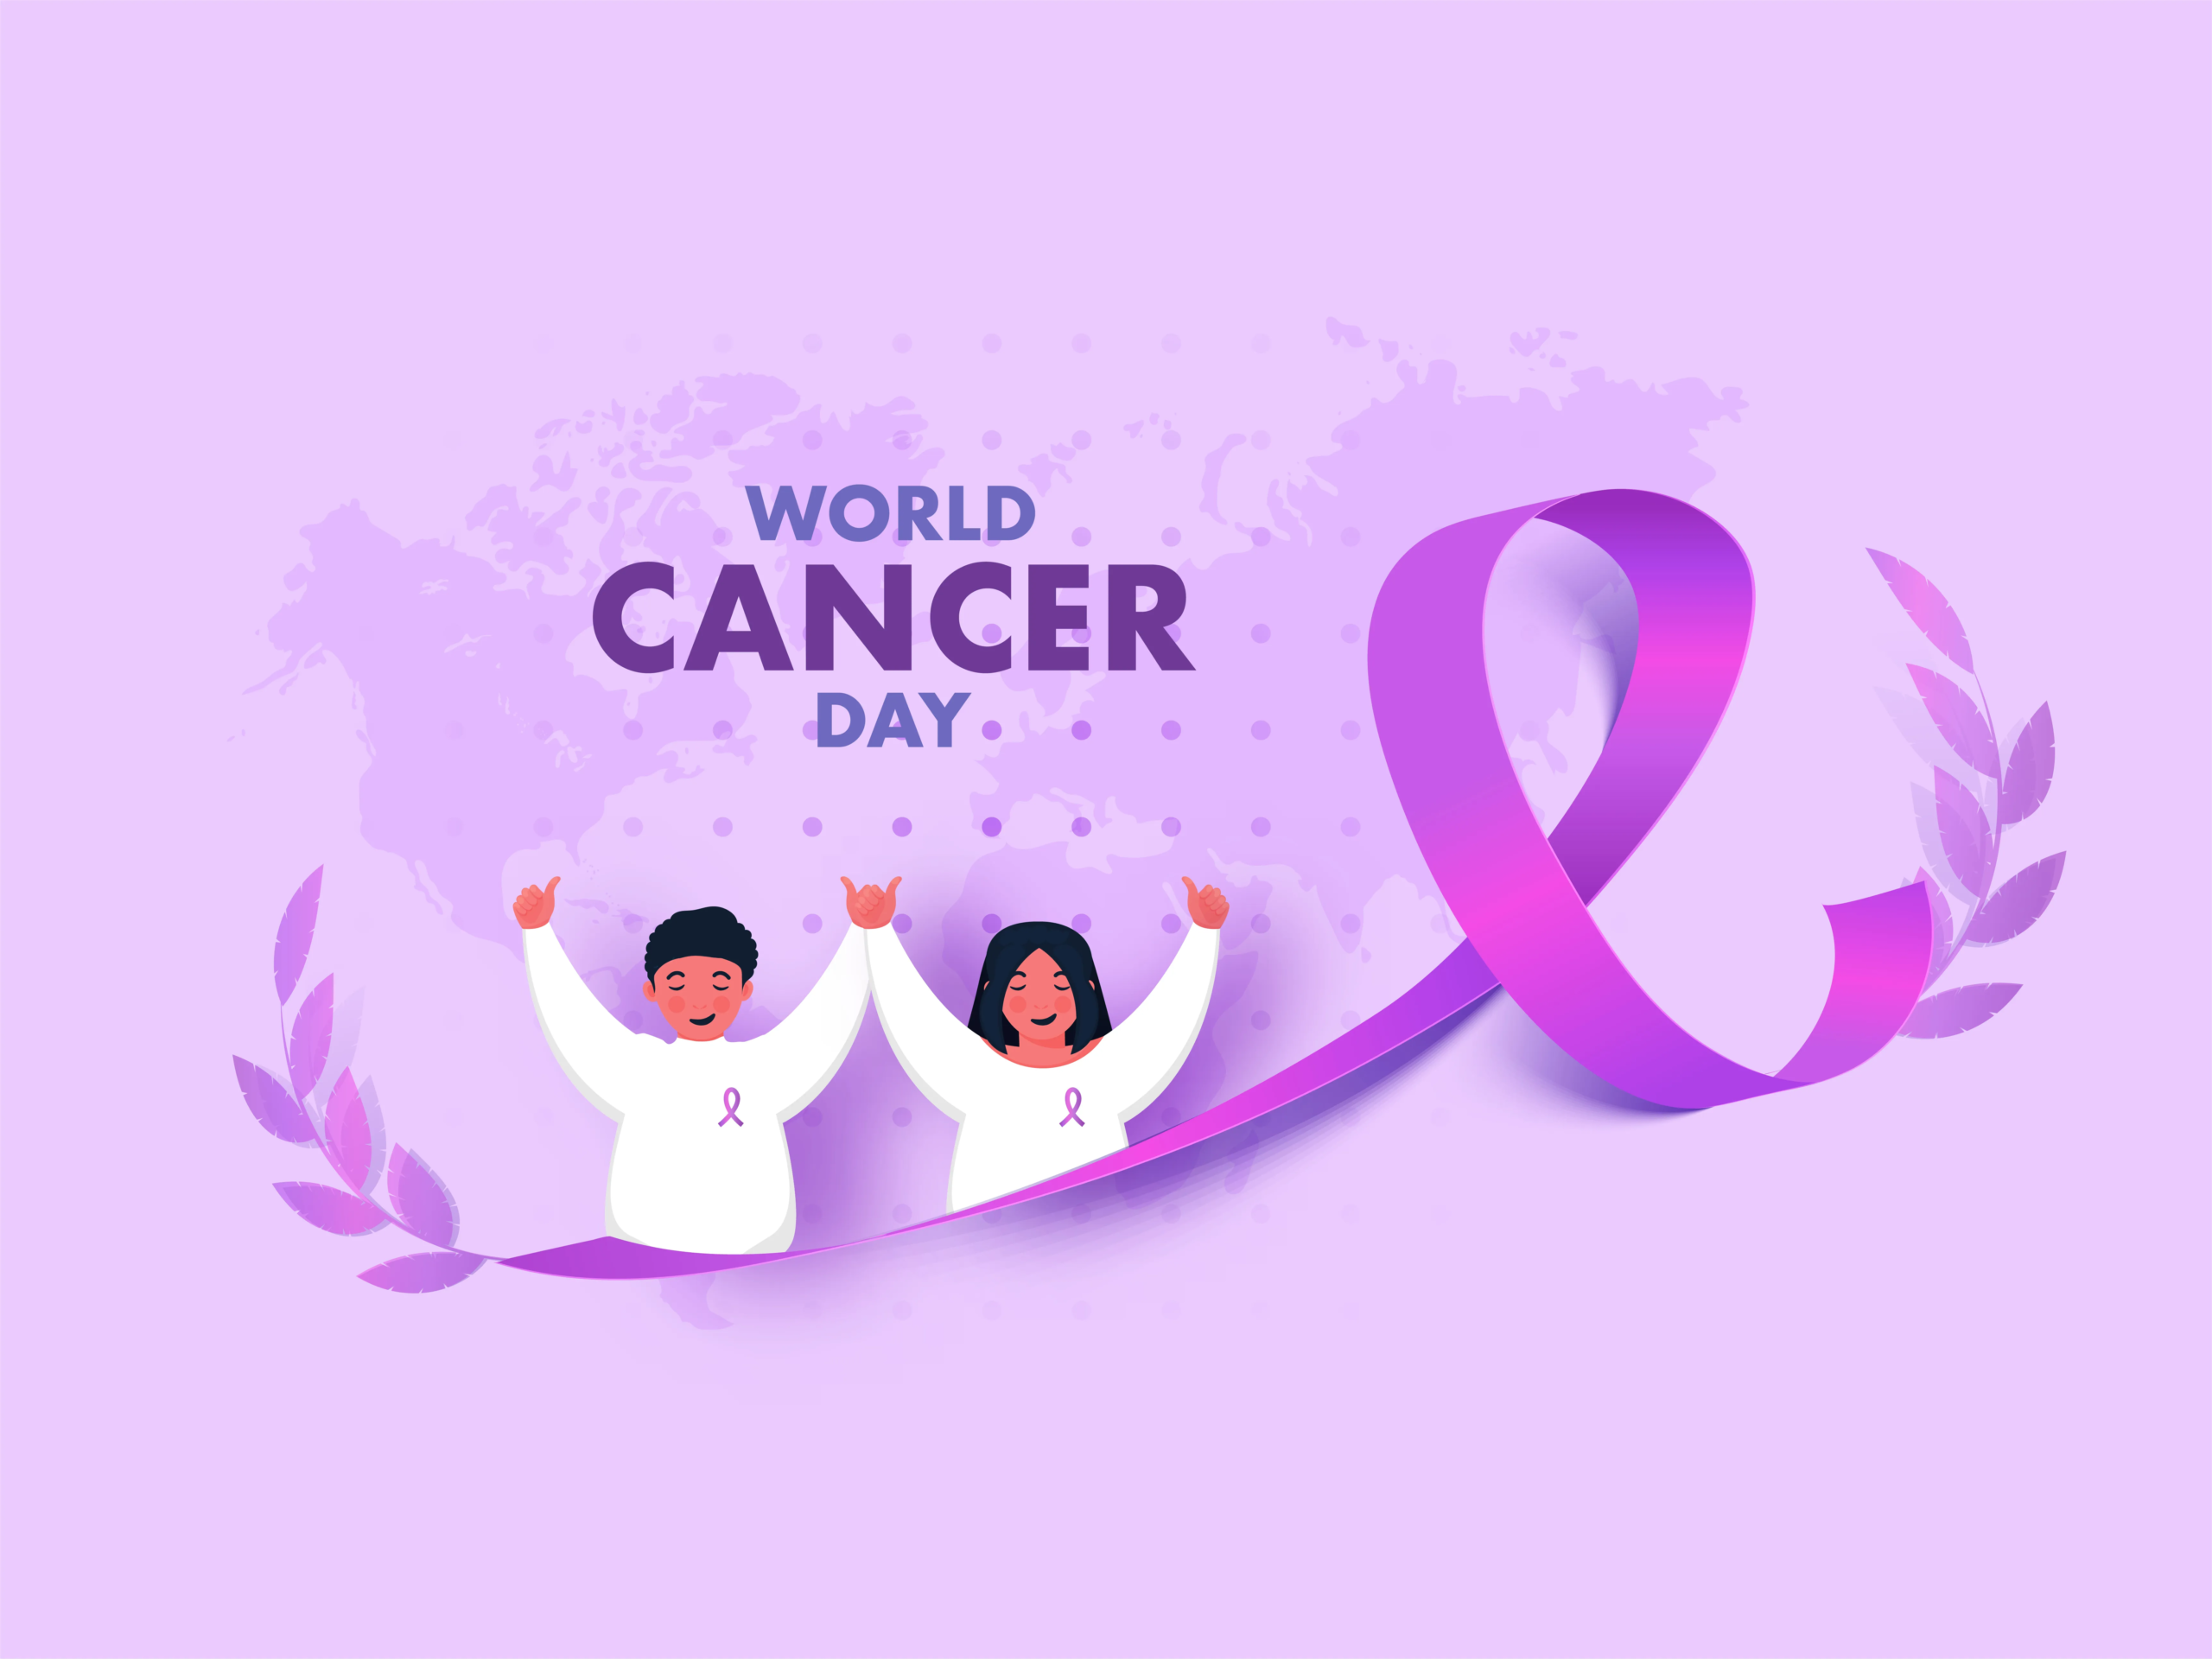 World Cancer Day free image